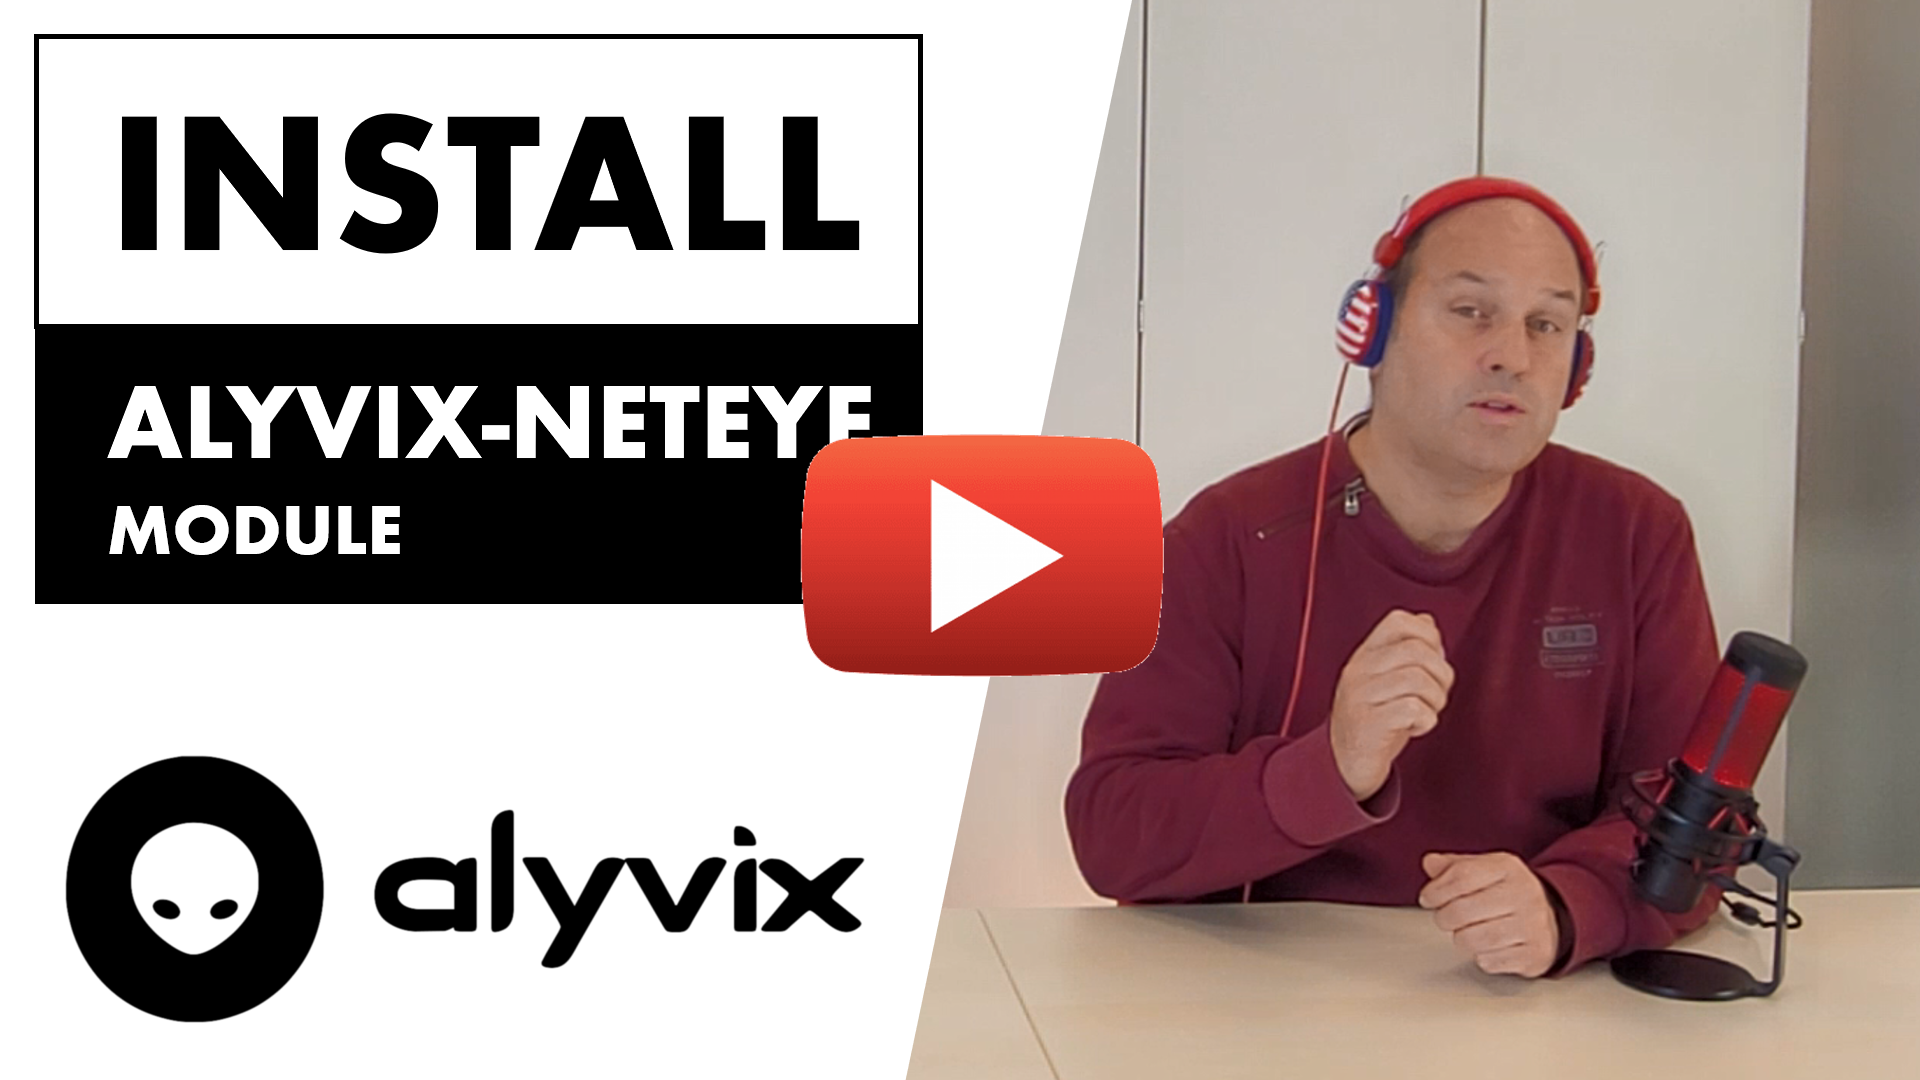 Install Alyvix NetEye module, version 2.0.0